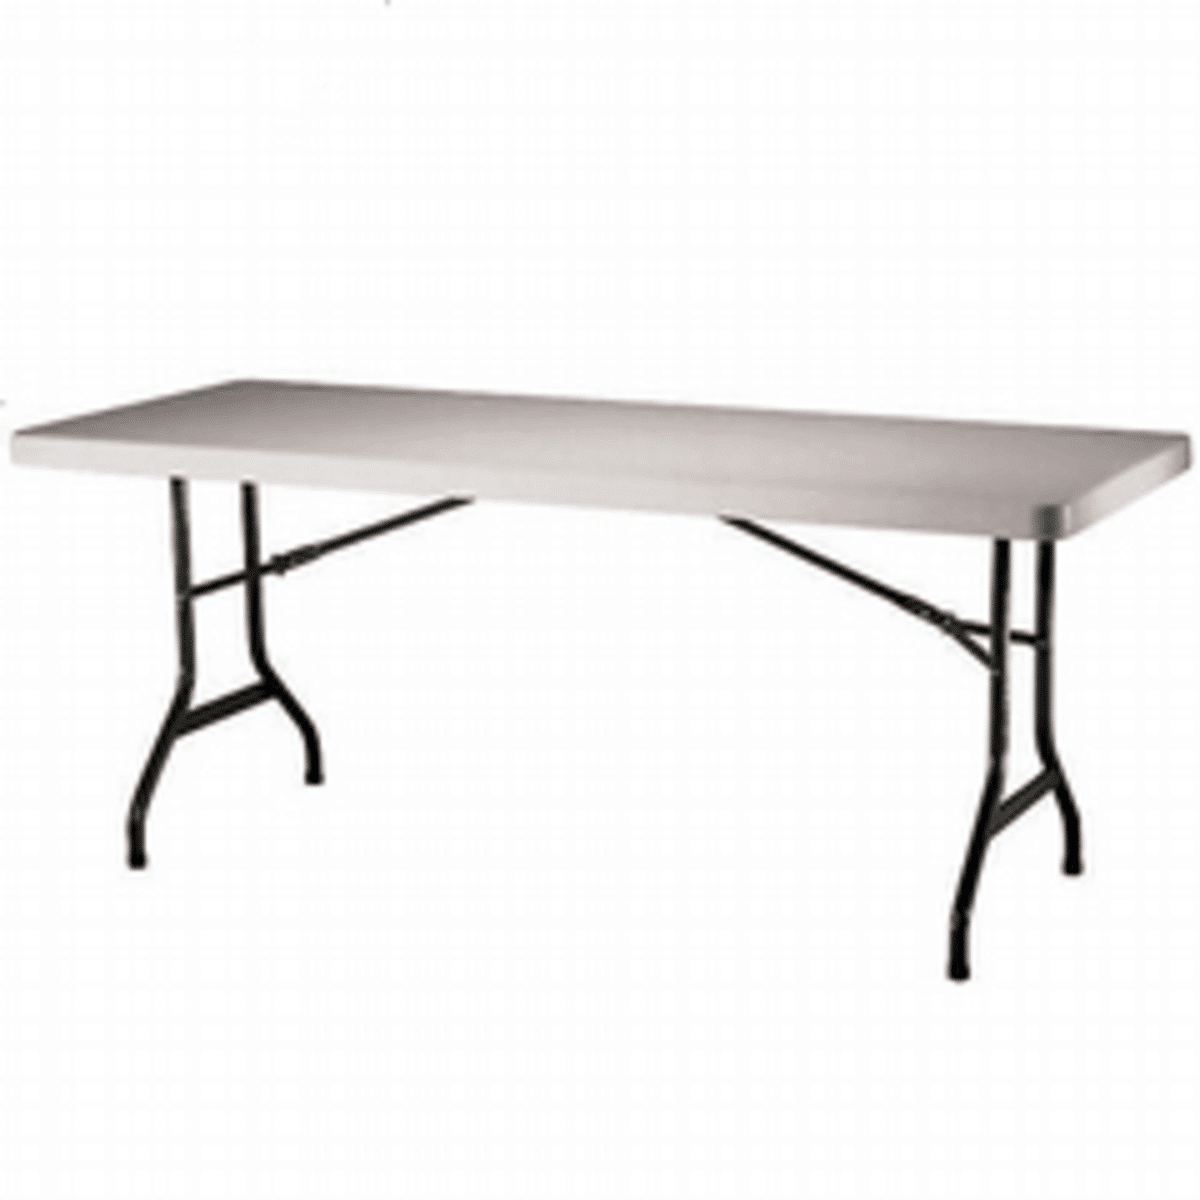 0104-folding-table